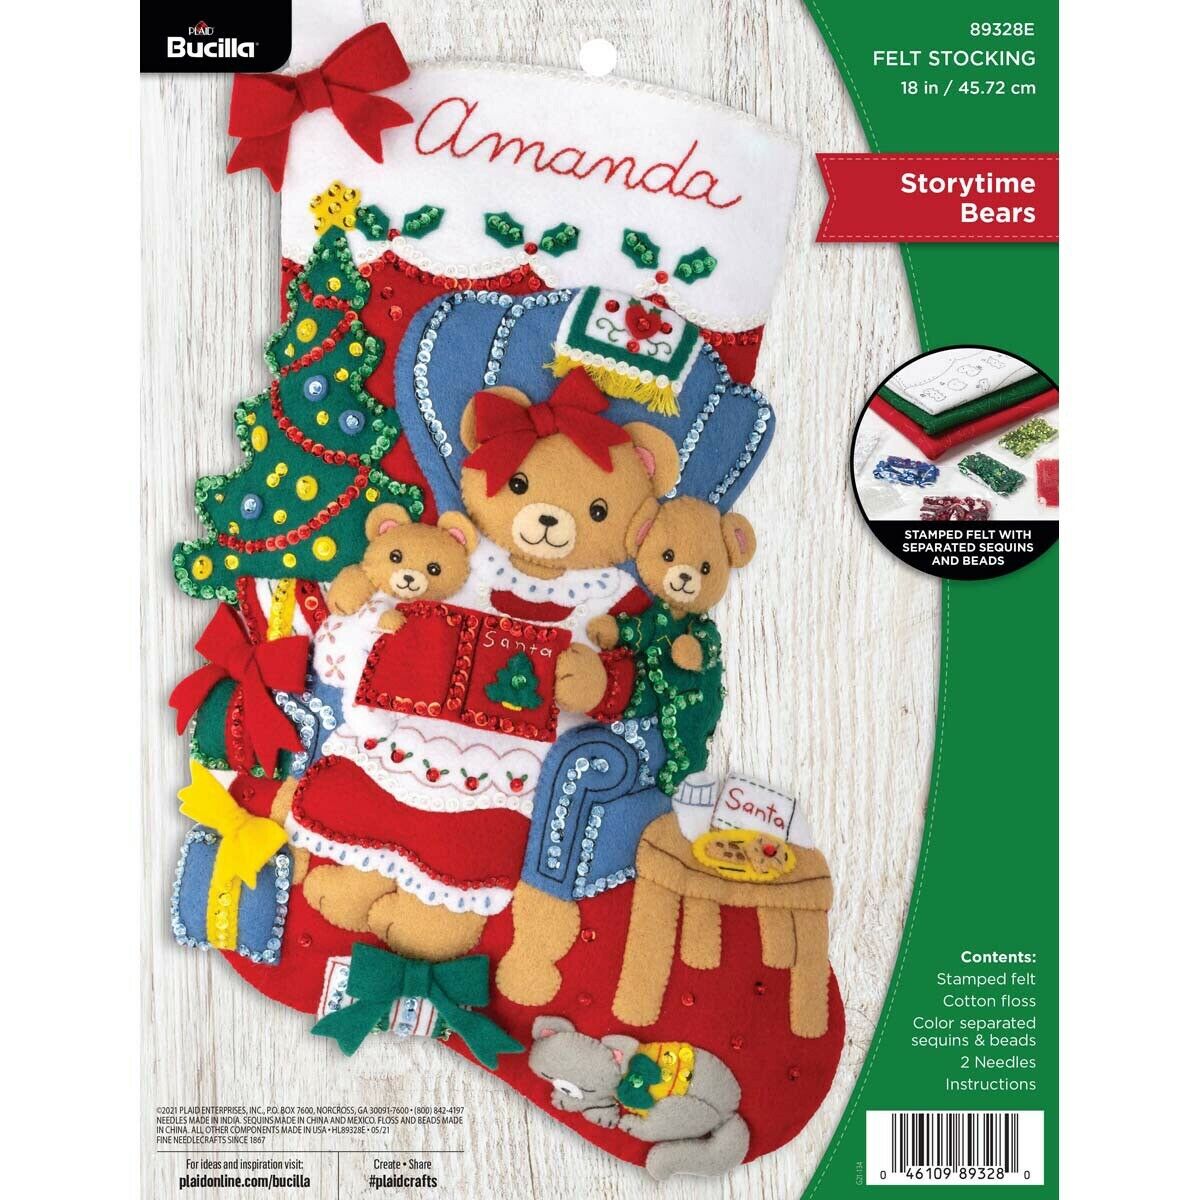 ᗷᑌᑕiᒪᒪᗩ 18" Felt Applique Christmas Stocking Kit 🎄"storytime Bears” New!